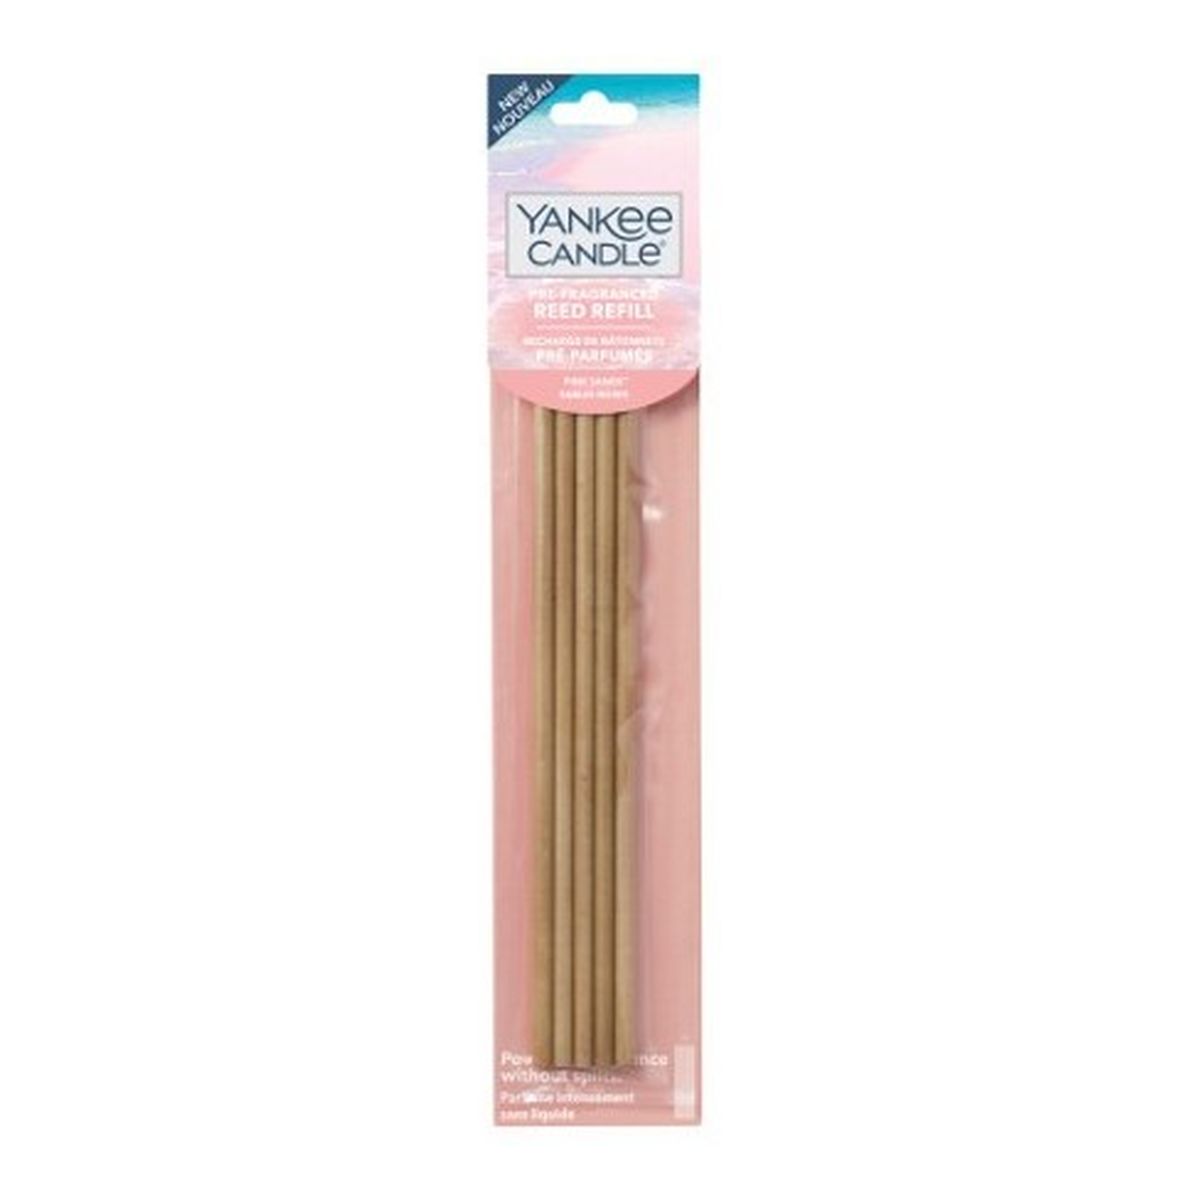 Yankee Candle Reed refill pałeczki zapachowe pink sands